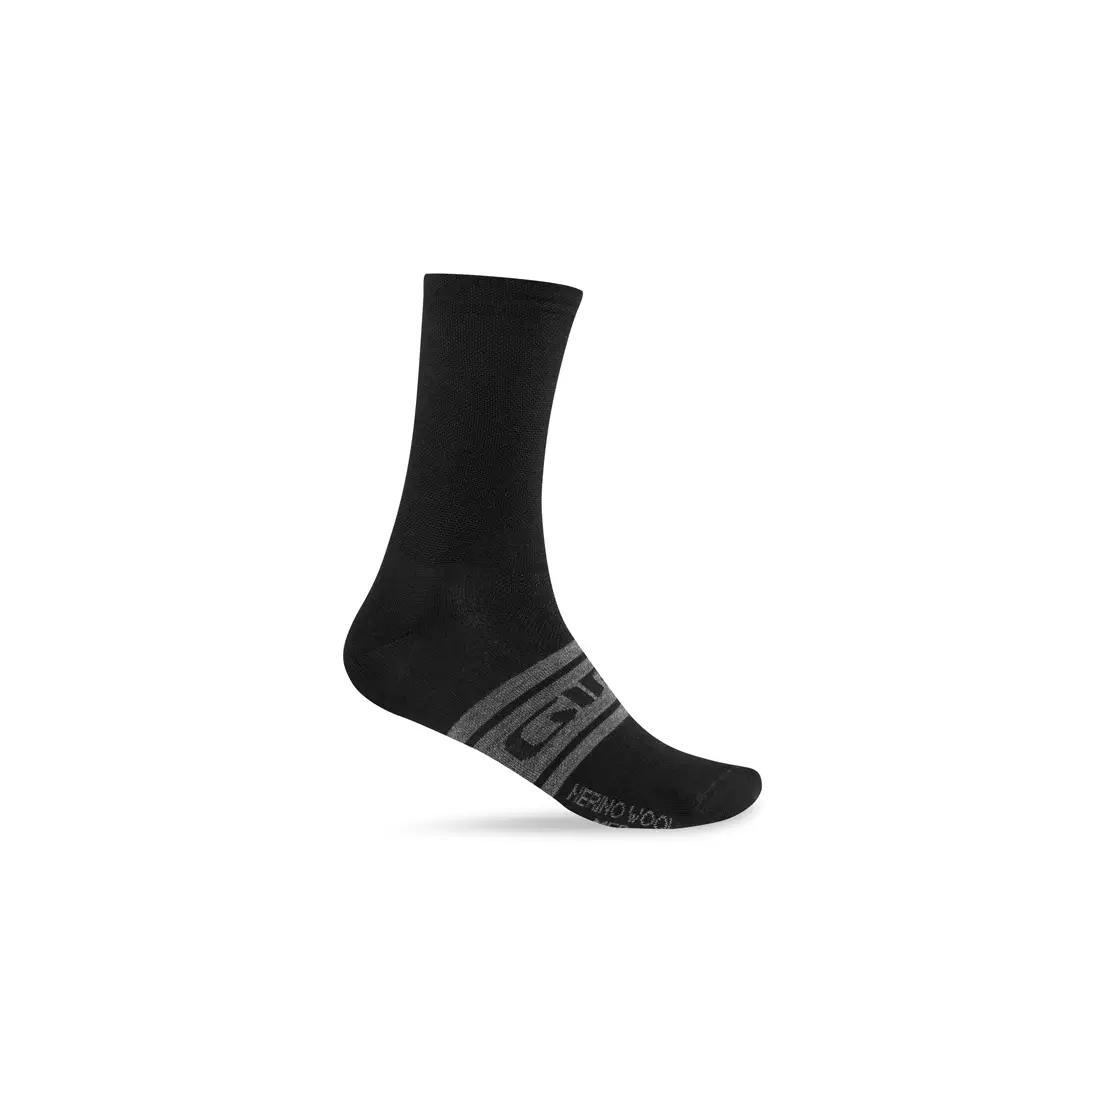 GIRO cycling socks seasonal merino wool black charcoal GR-2038529